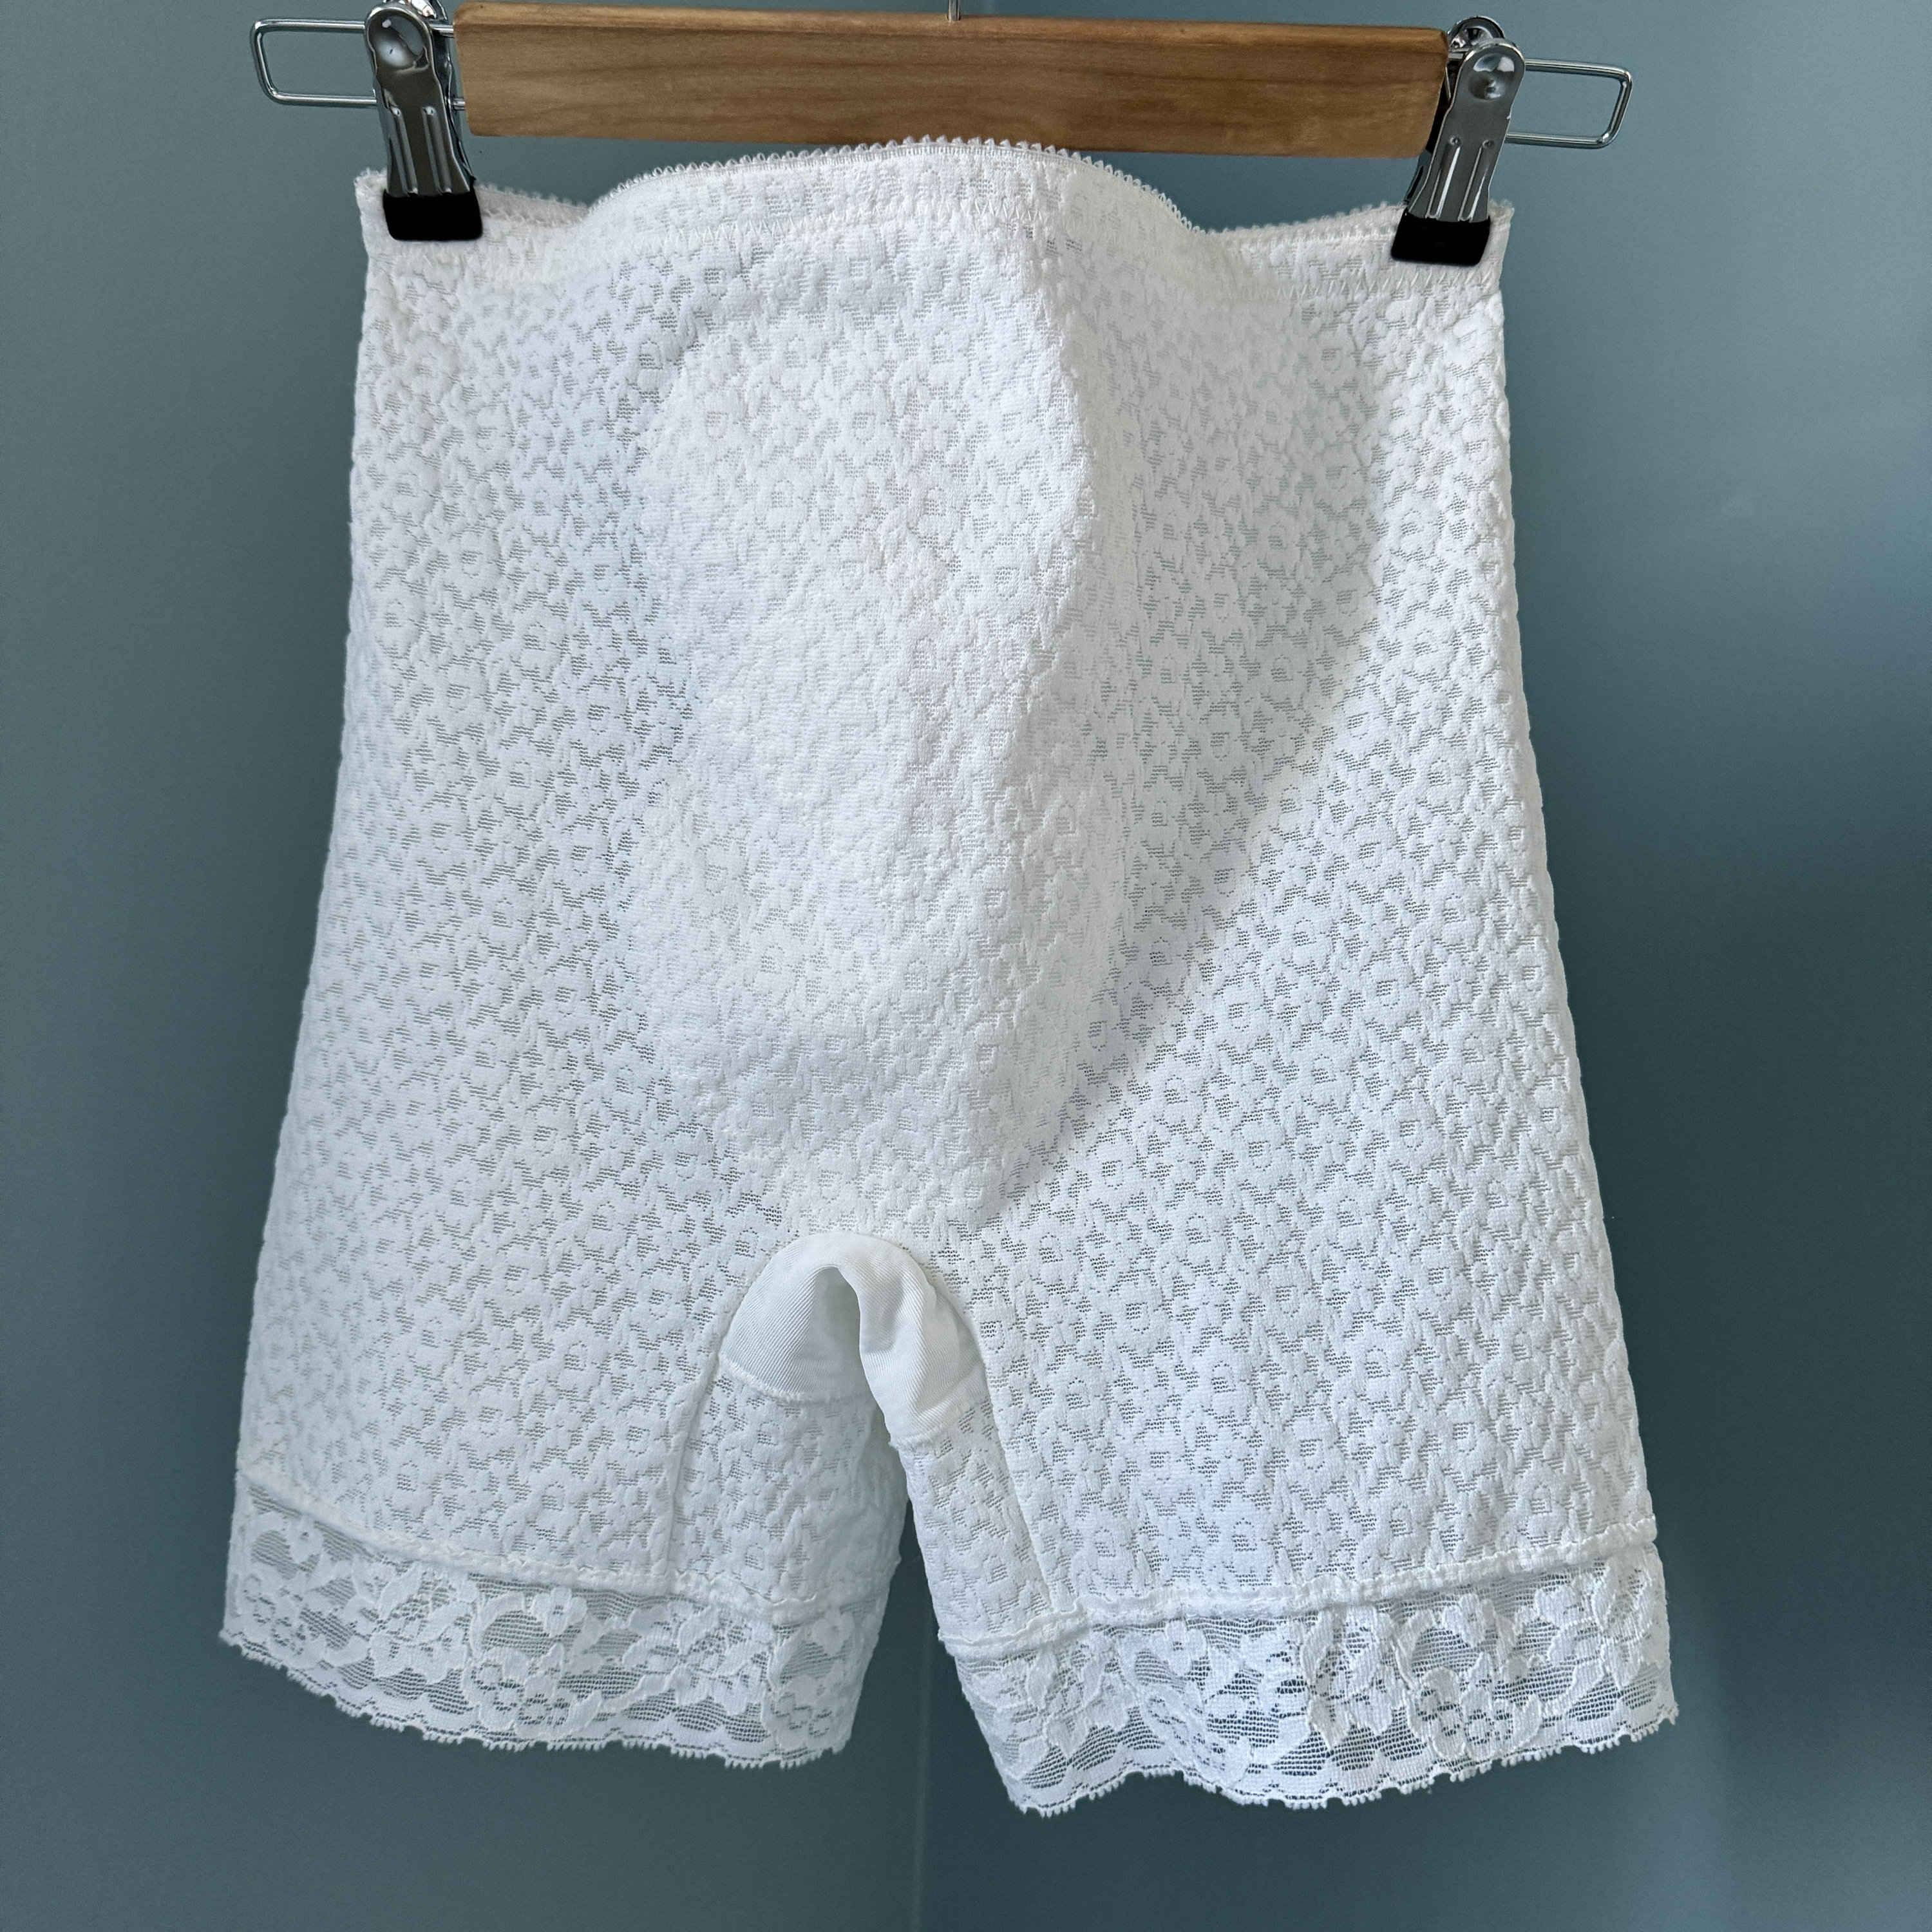 U20 Esme Girls Comfortable Underwear XS S M L XL PT 6 8 10 12 14 panty in  Solid 